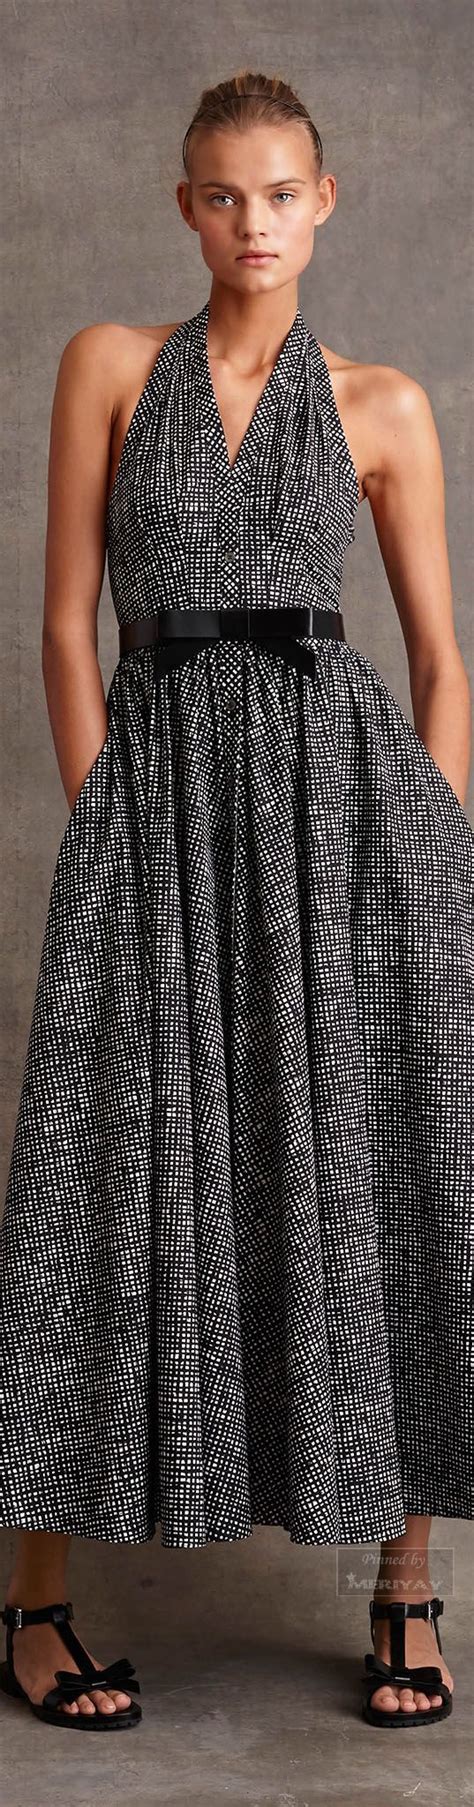 Maxi Gray Dress Roress Closet Ideas Women Fashion Outfit Clothing Style